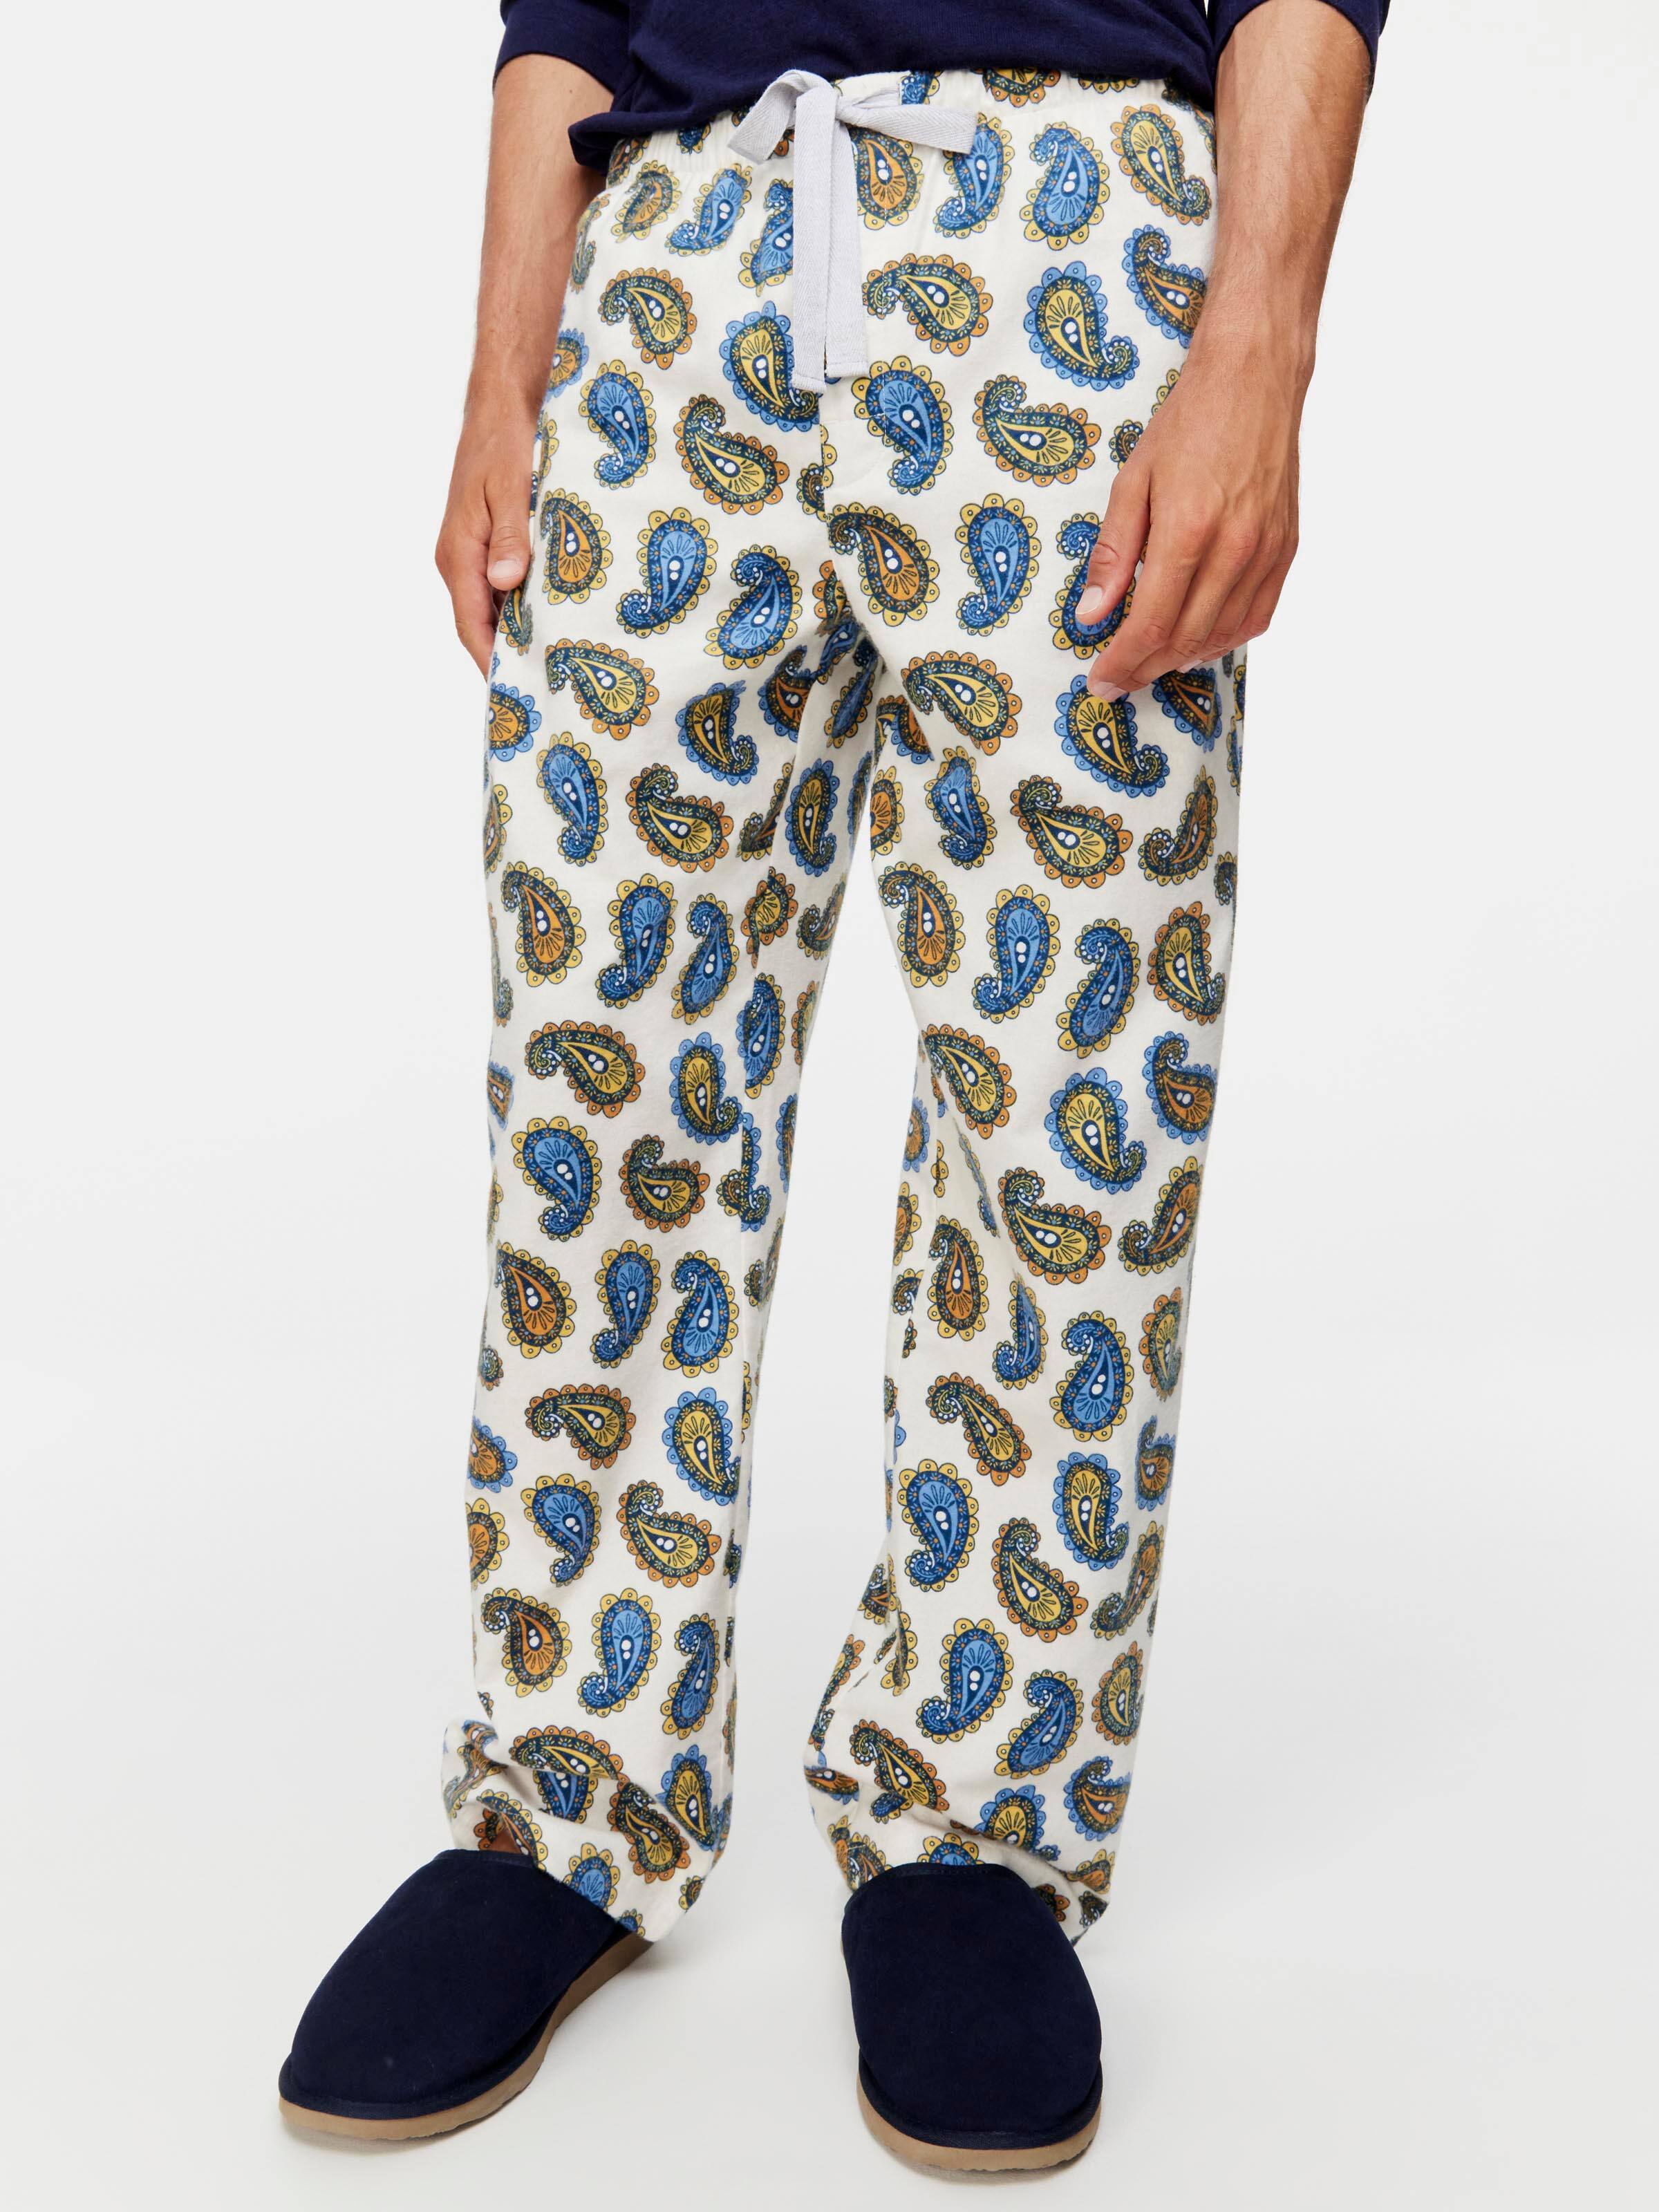 Polo Ralph Lauren Men's All Over Bear Pajama Pants - Navy Multi Plaid